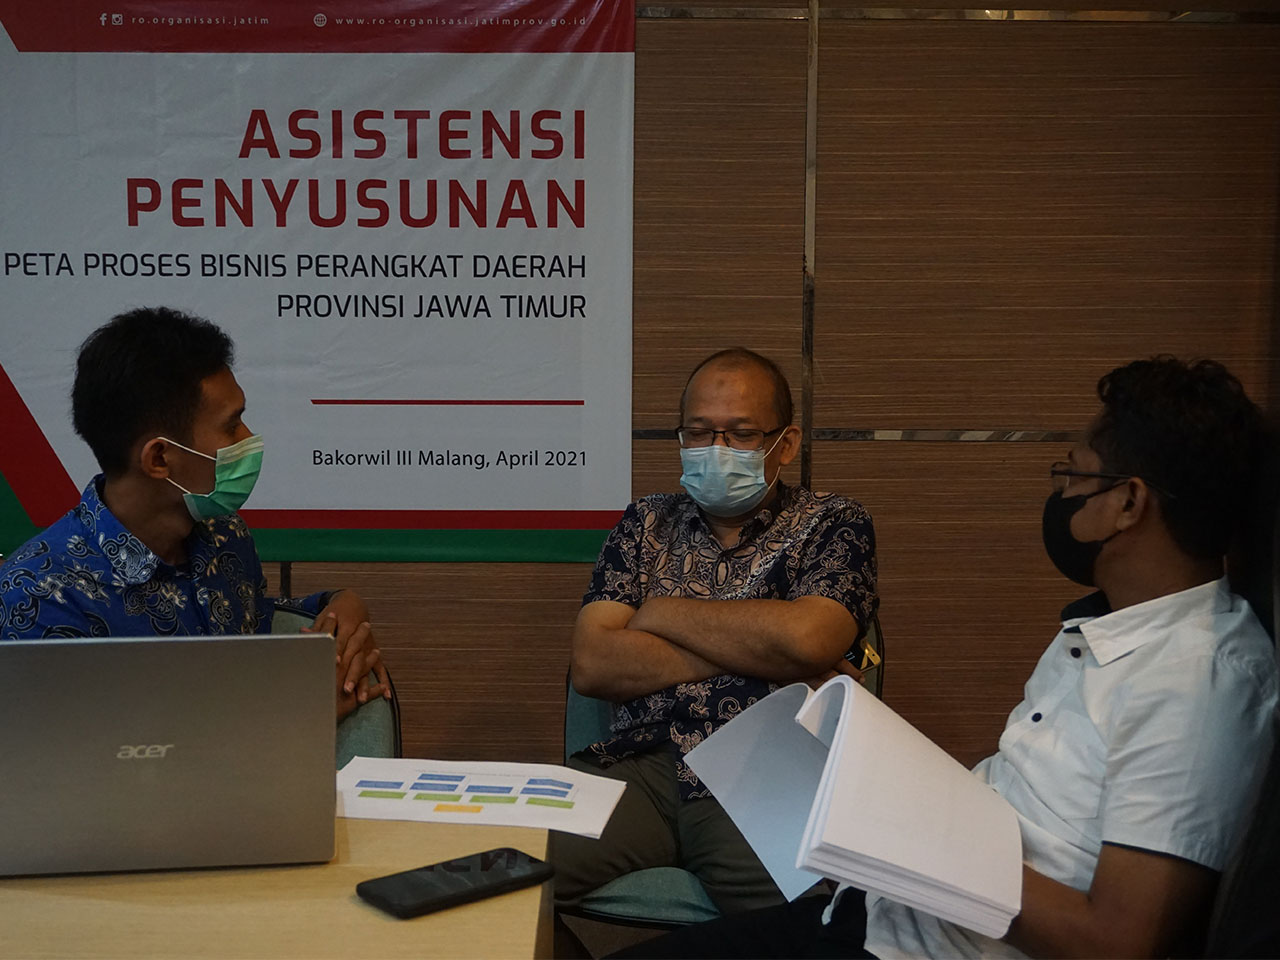 Asistensi Penyusunan Peta Proses Bisnis Tingkat Perangkat Daerah Provinsi Jawa Timur